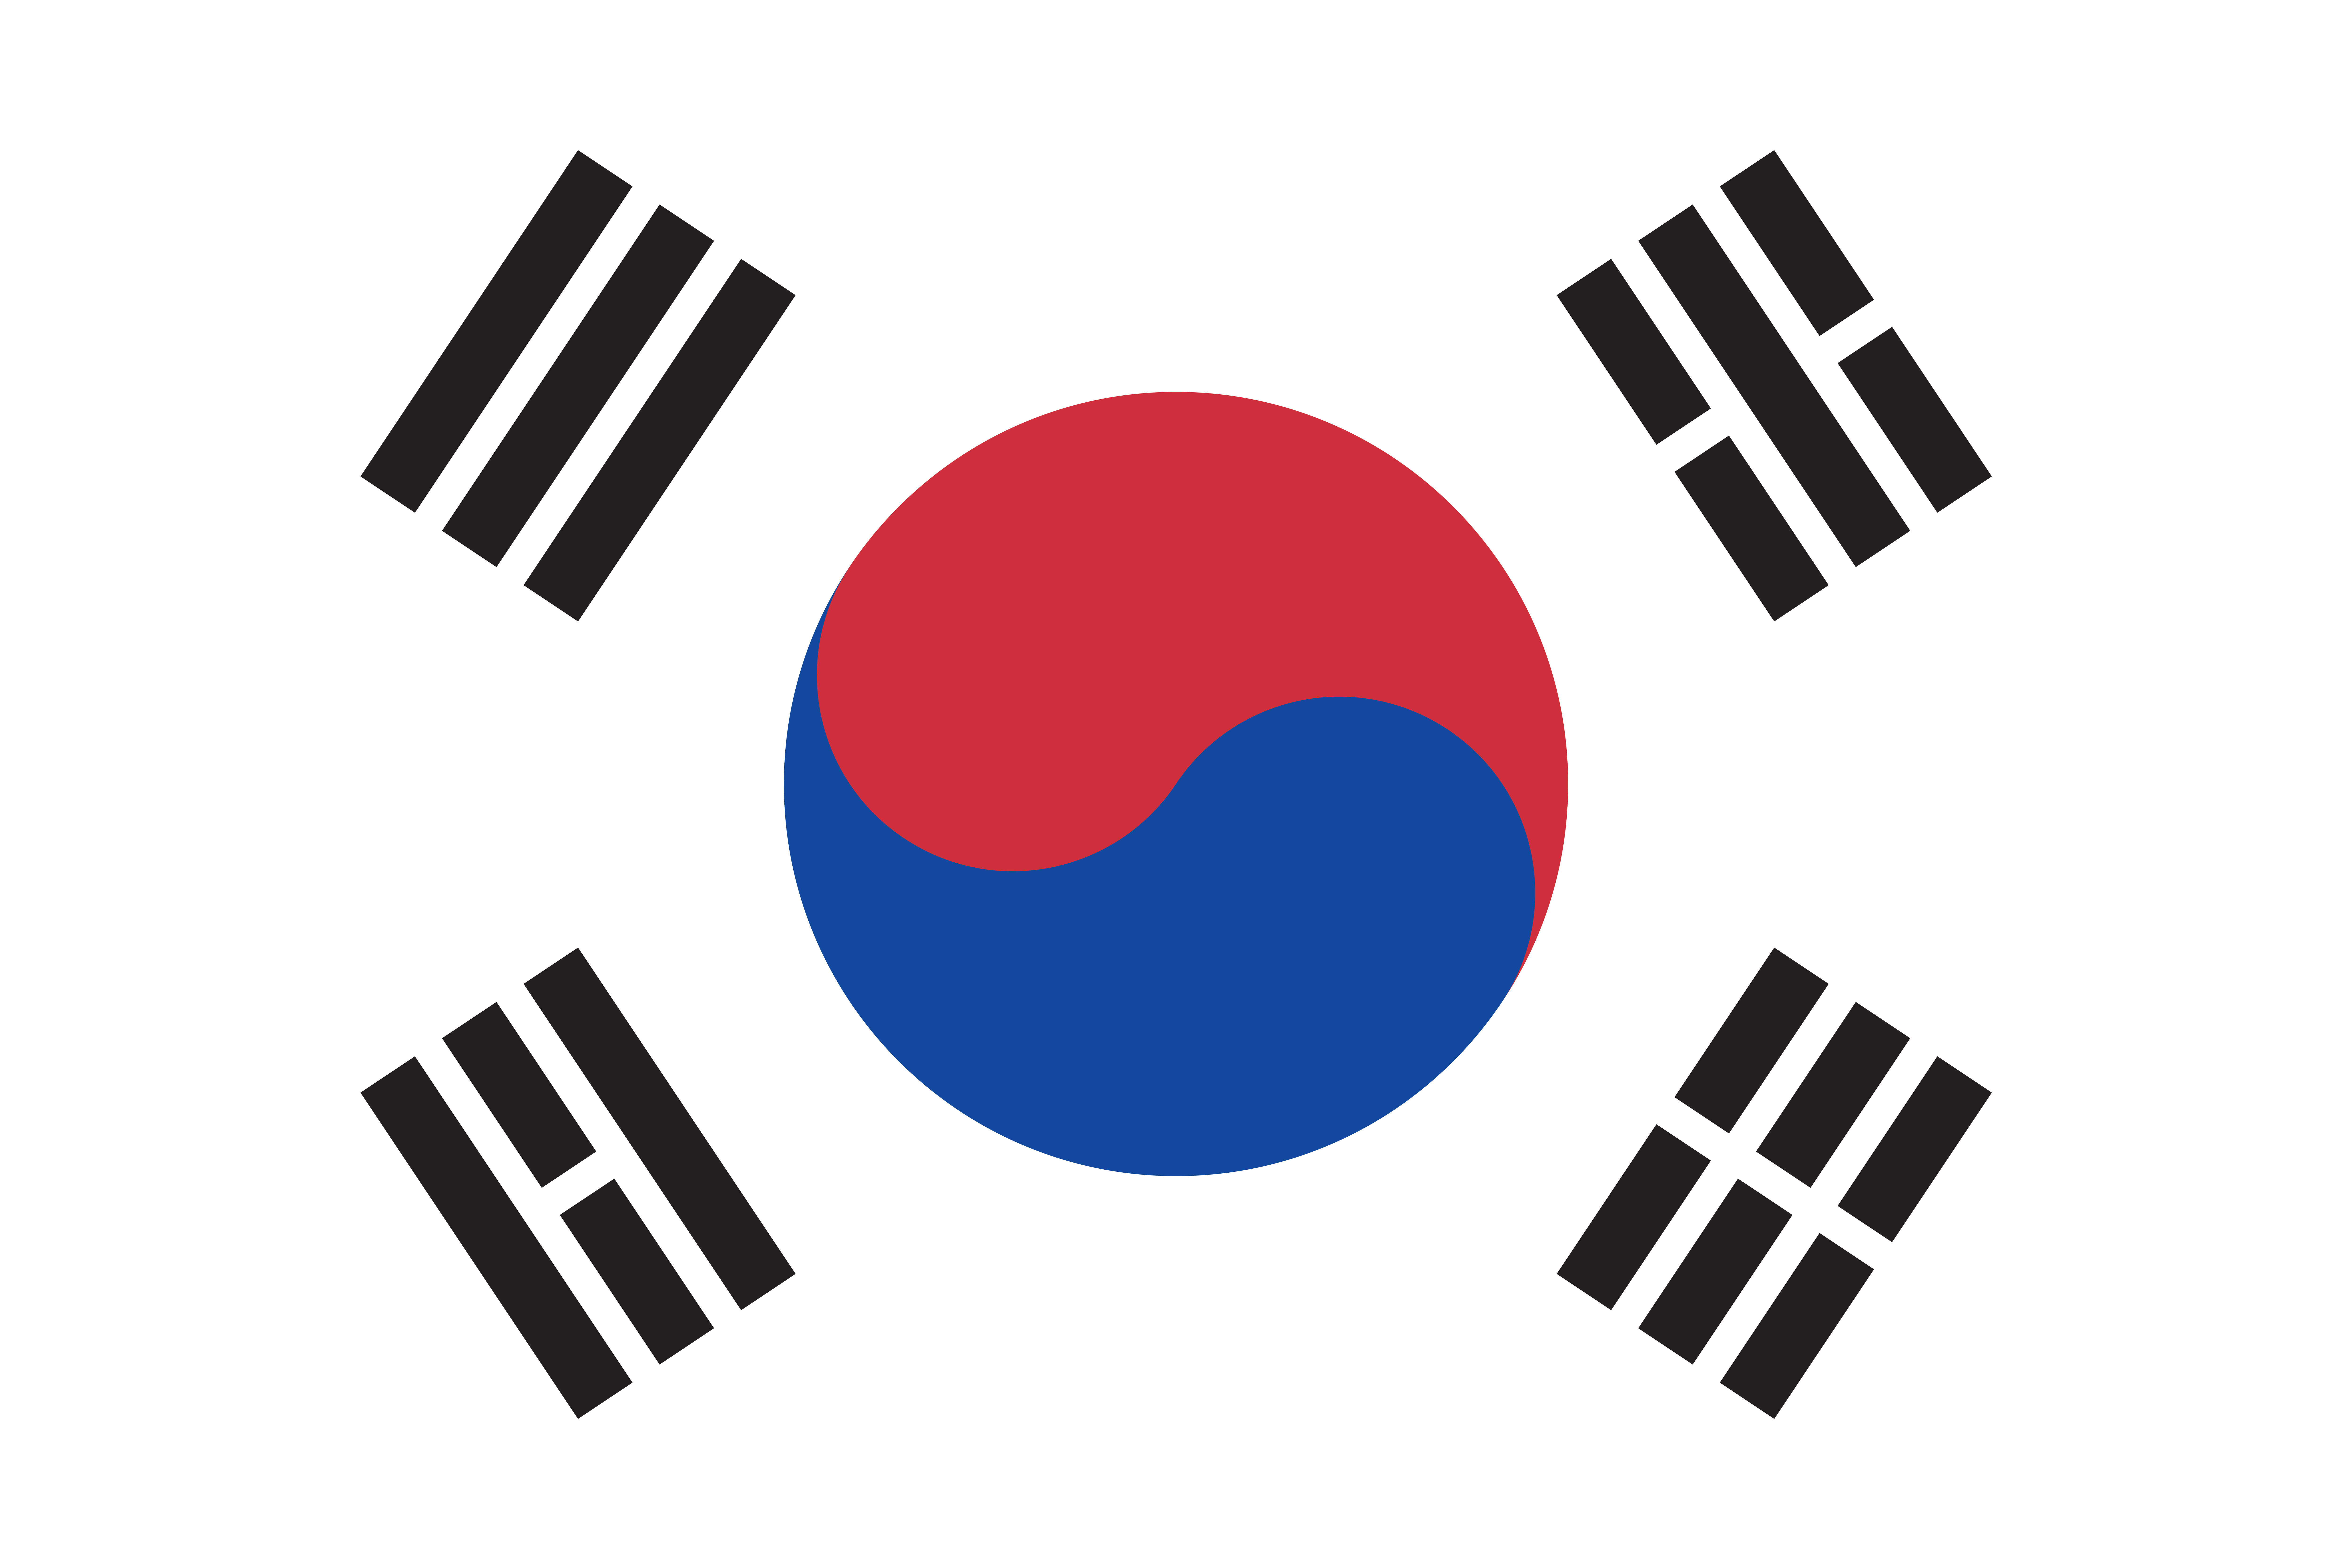 KOREA, REPUBLIC OF (SOUTH K.)